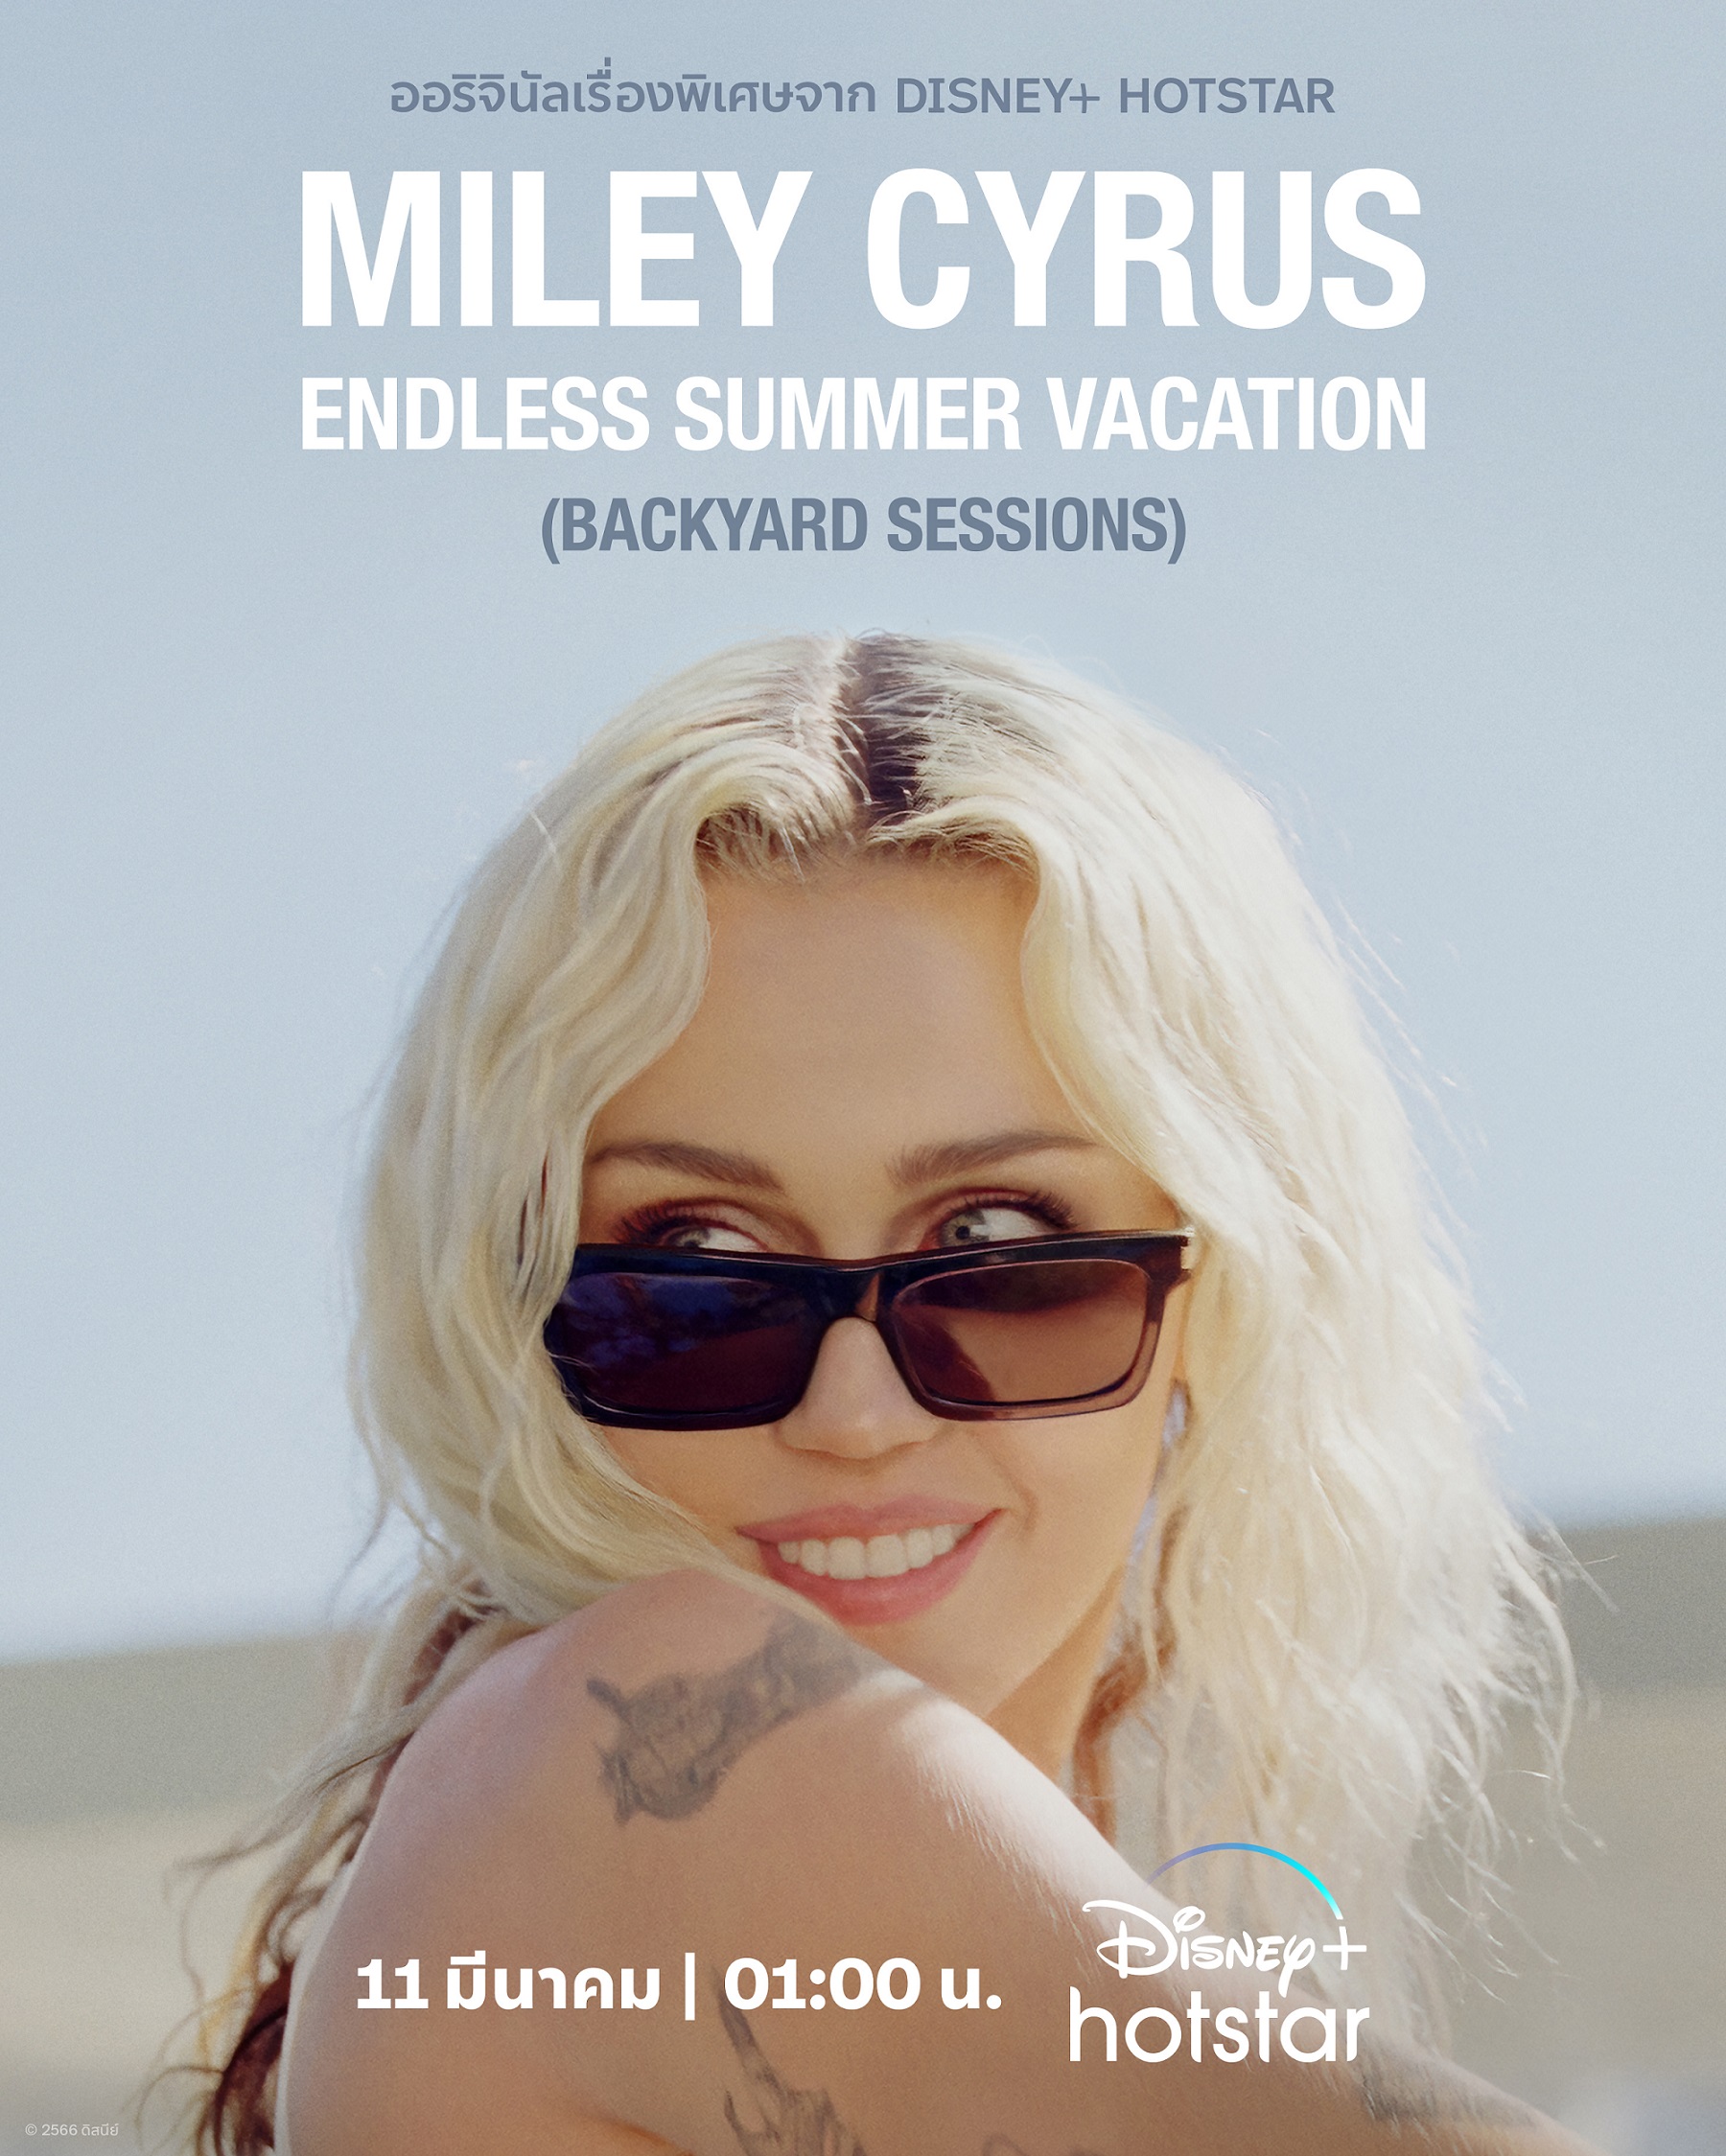 Miley Cyrus ‒ Endless Summer Vacation (Backyard Sessions)